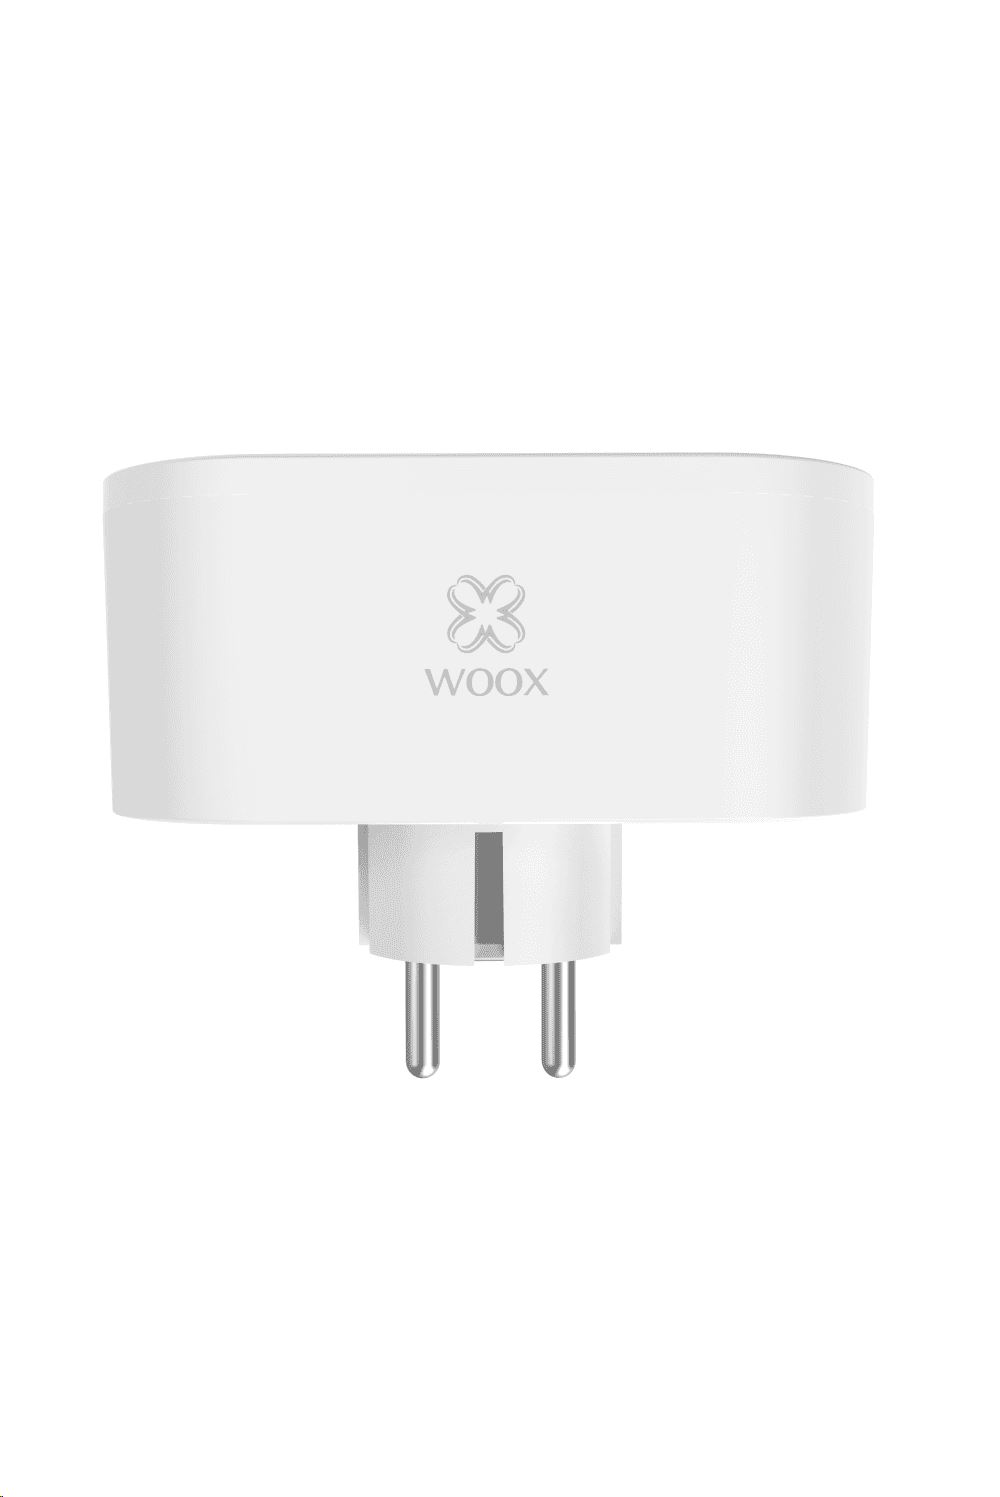 Woox Smart Home kettős okos dugalj fehér (R6073)